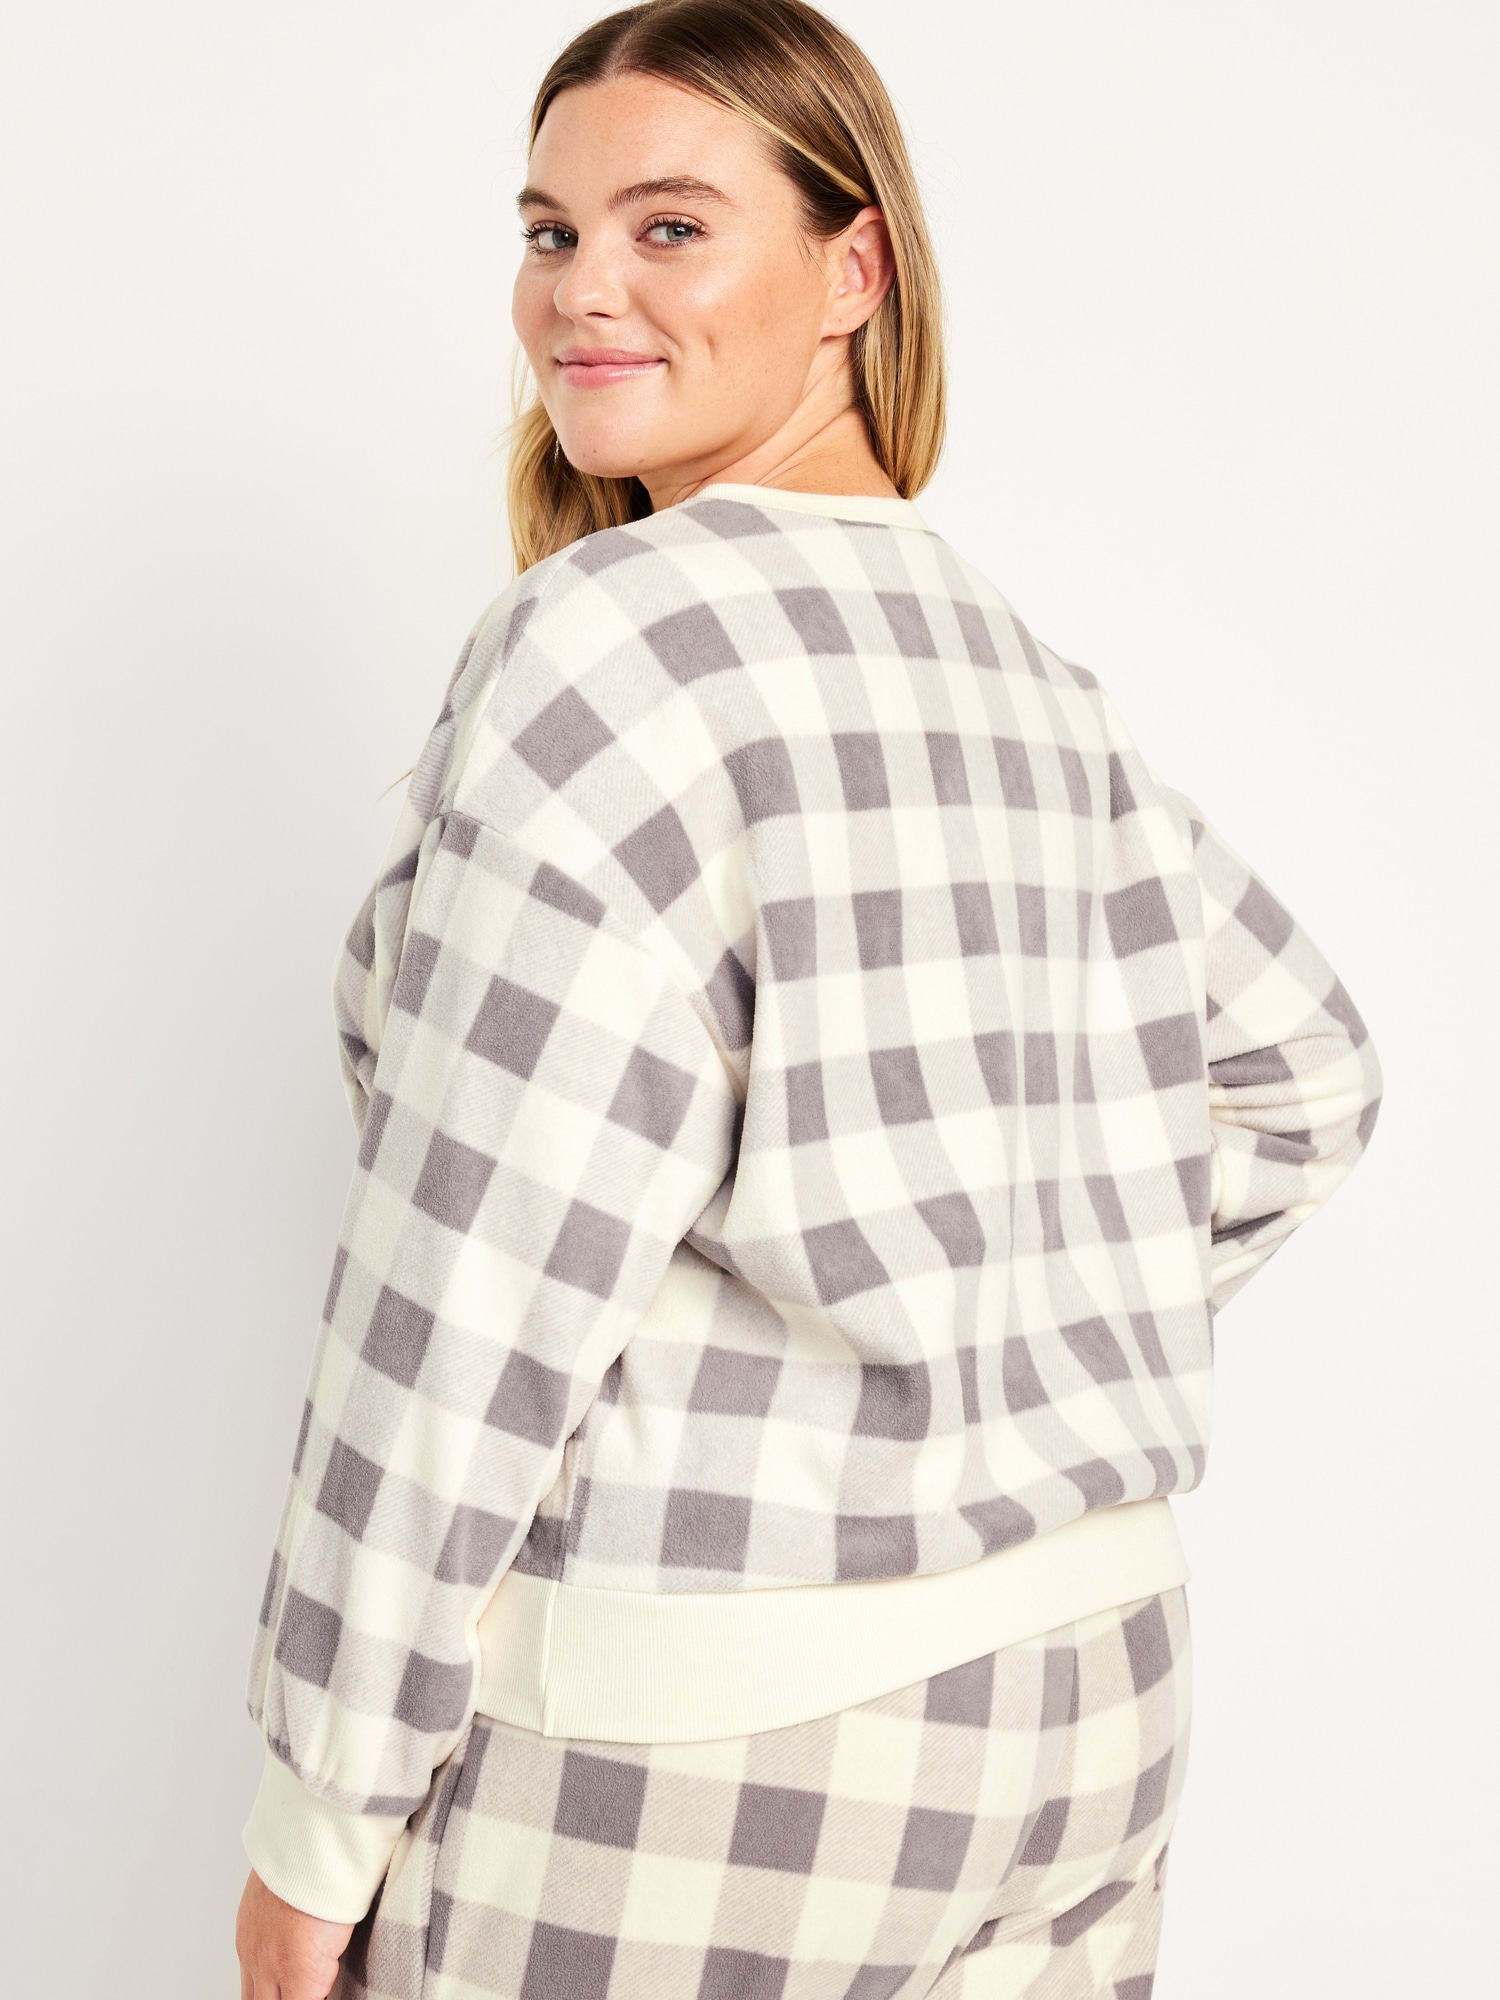 Fleece Pajamas for Women, Microfleece Pullover Sweater Top and